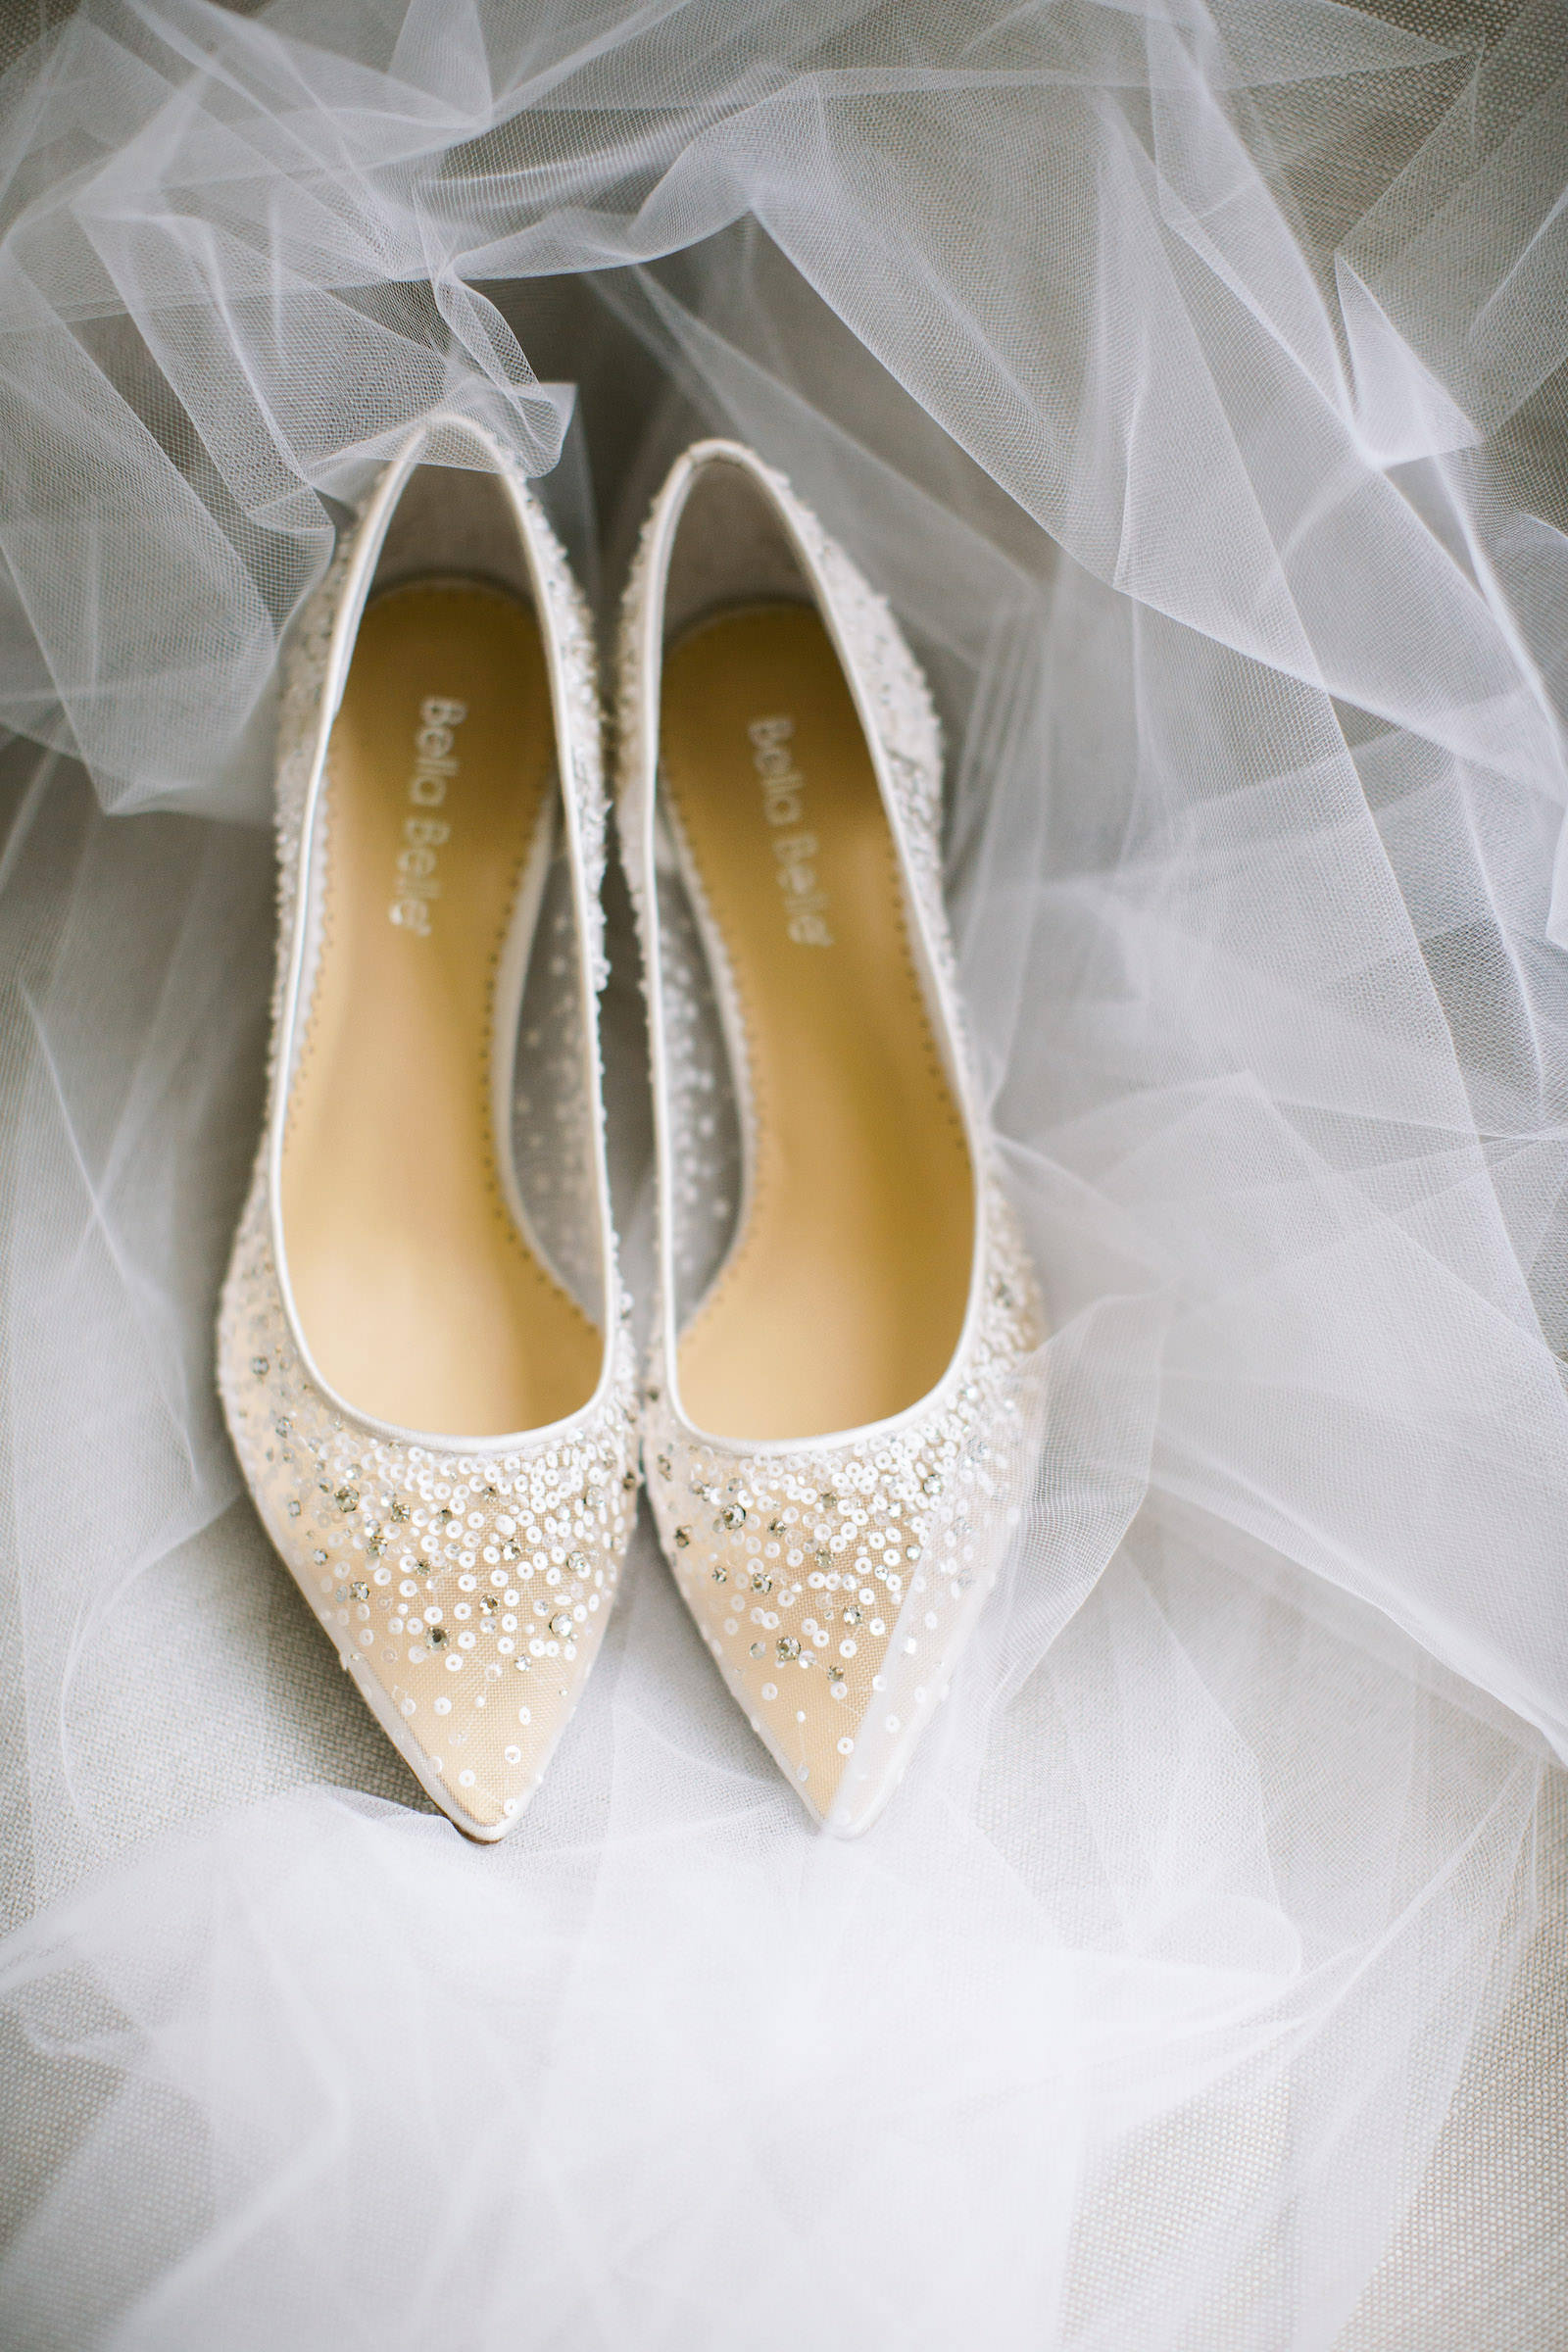 Sequin and Rhinestone Wedding Shoe Ideas